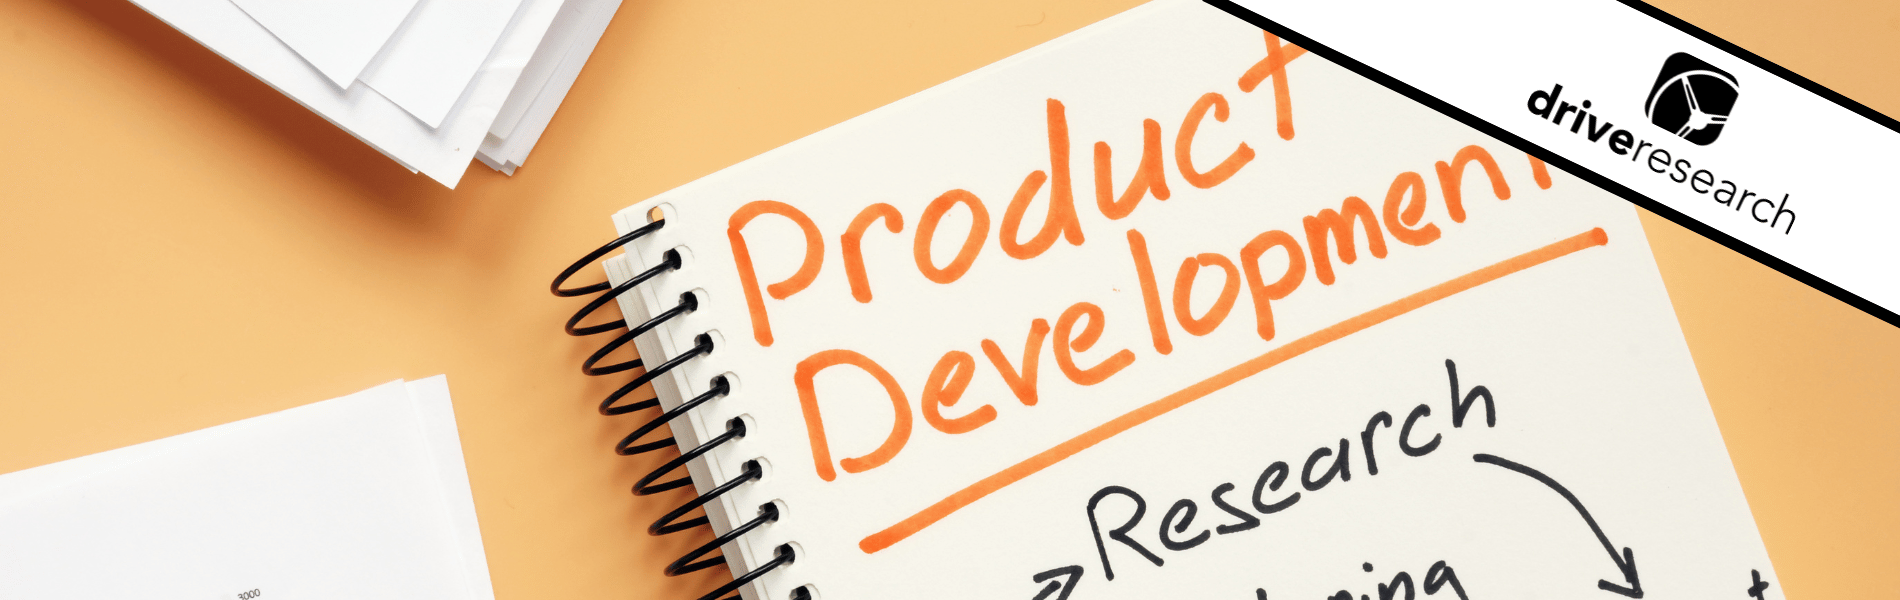 product development plan on desk